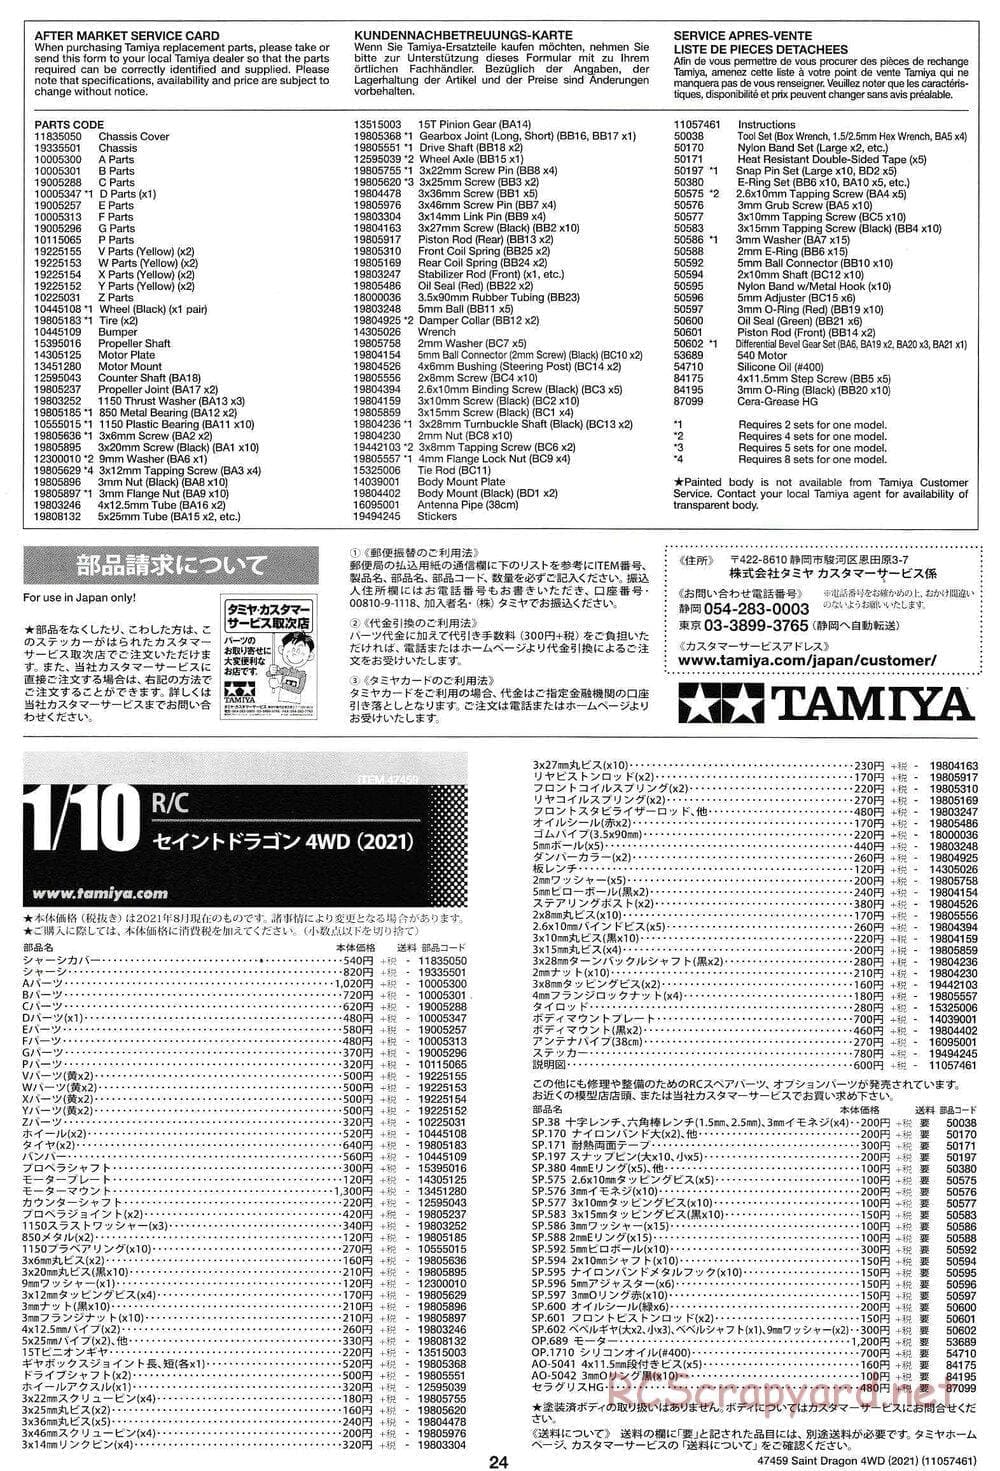 Tamiya - Saint Dragon (2021) Chassis - Manual - Page 24